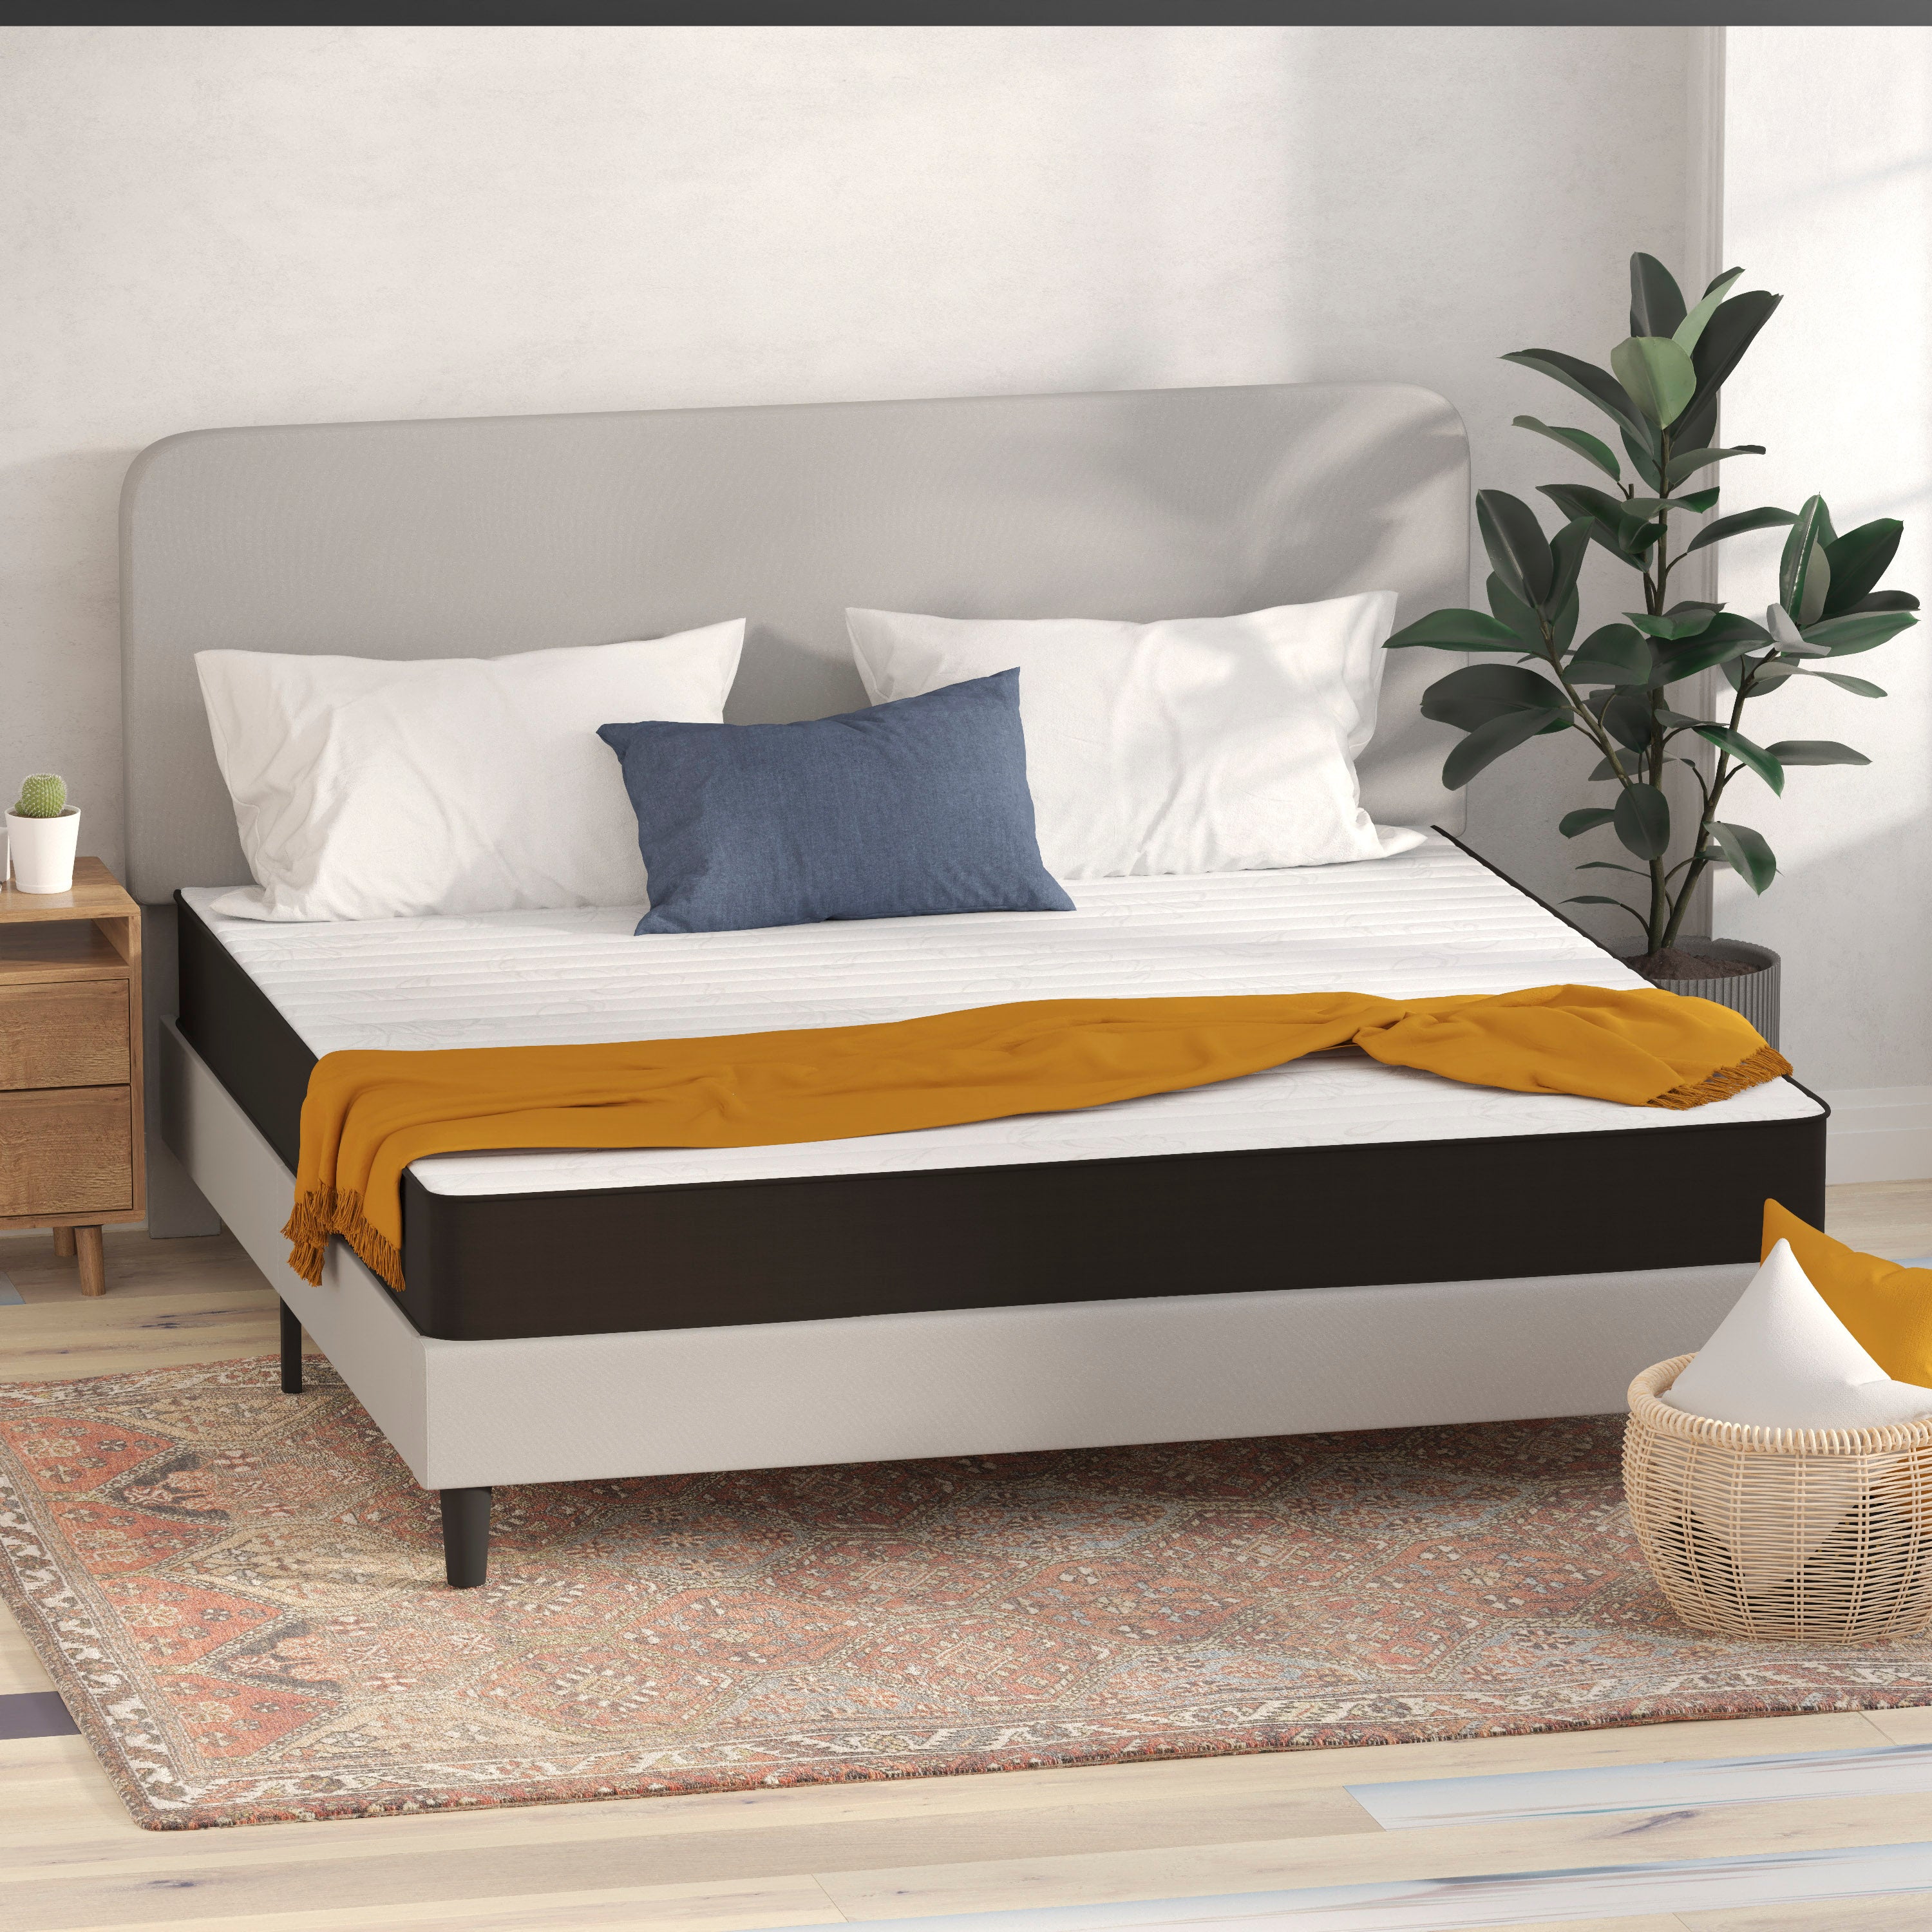 Capri Comfortable Sleep 8 Inch CertiPUR-US Certified Foam and Innerspring Hybrid Mattress, Mattress in a Box-Mattress-Flash Furniture-Wall2Wall Furnishings